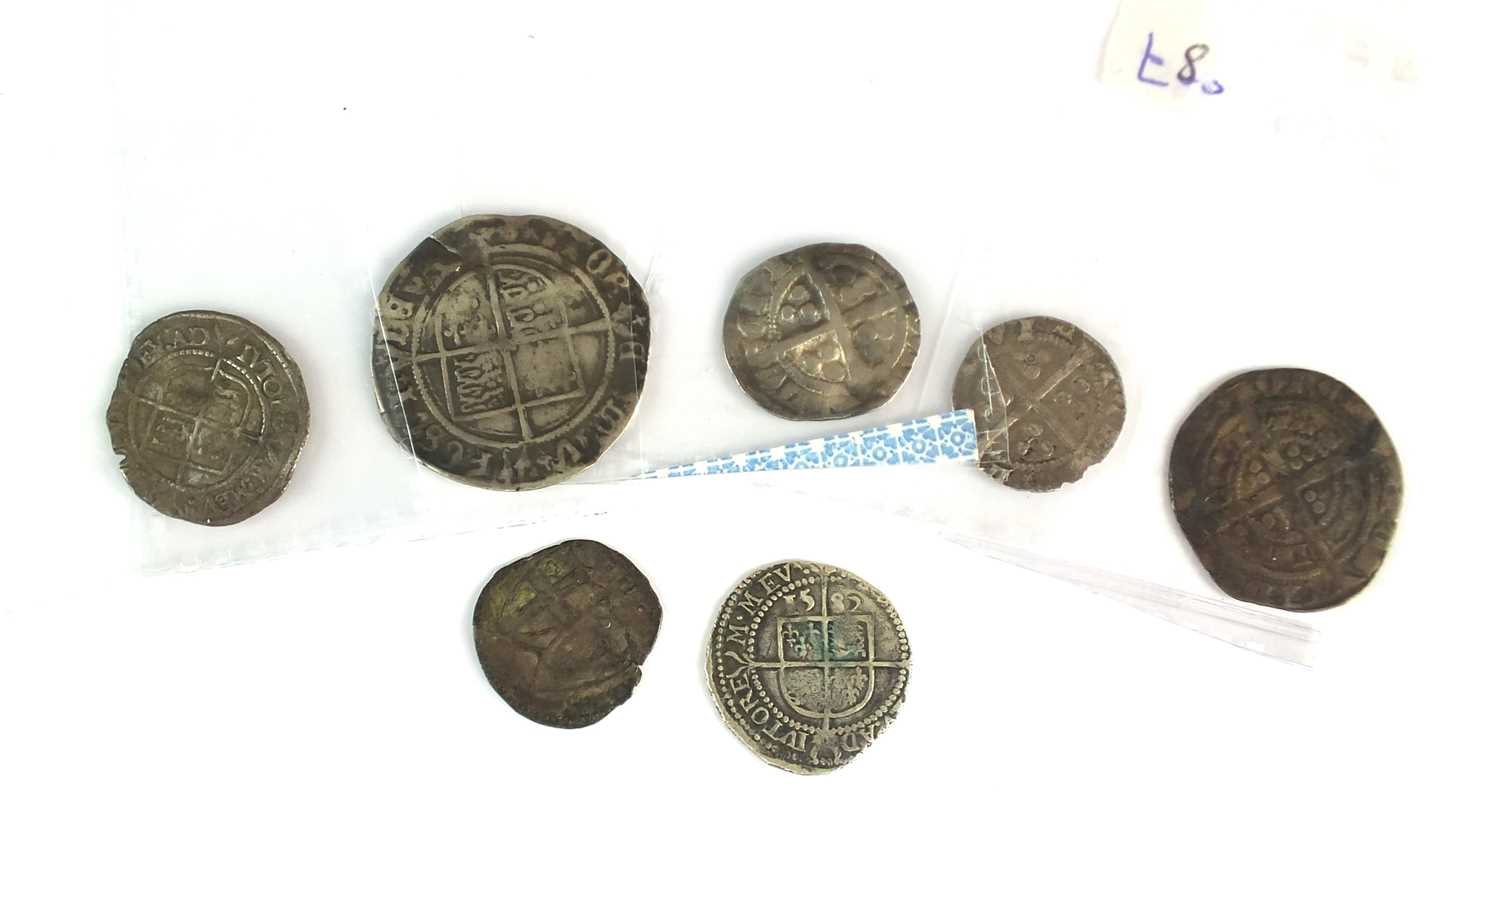 Seven hammered coins